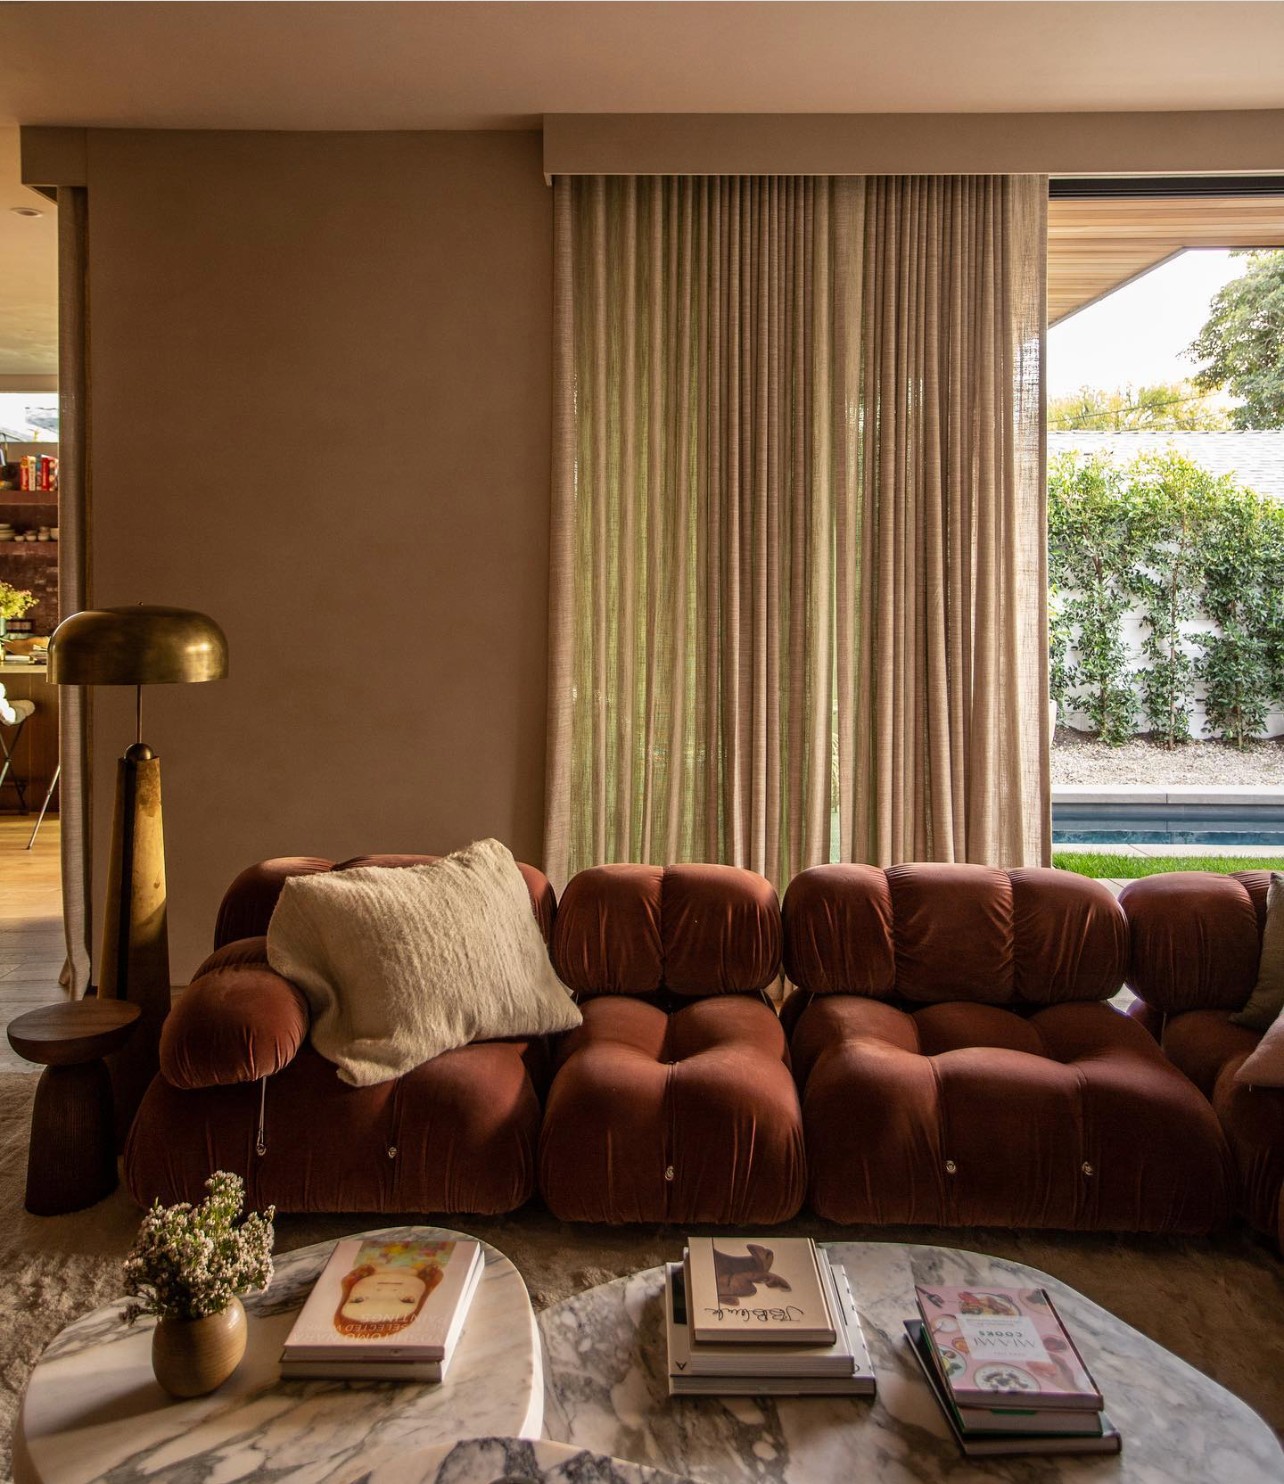 Design History | The Camaleonda Sofa by Mario Bellini